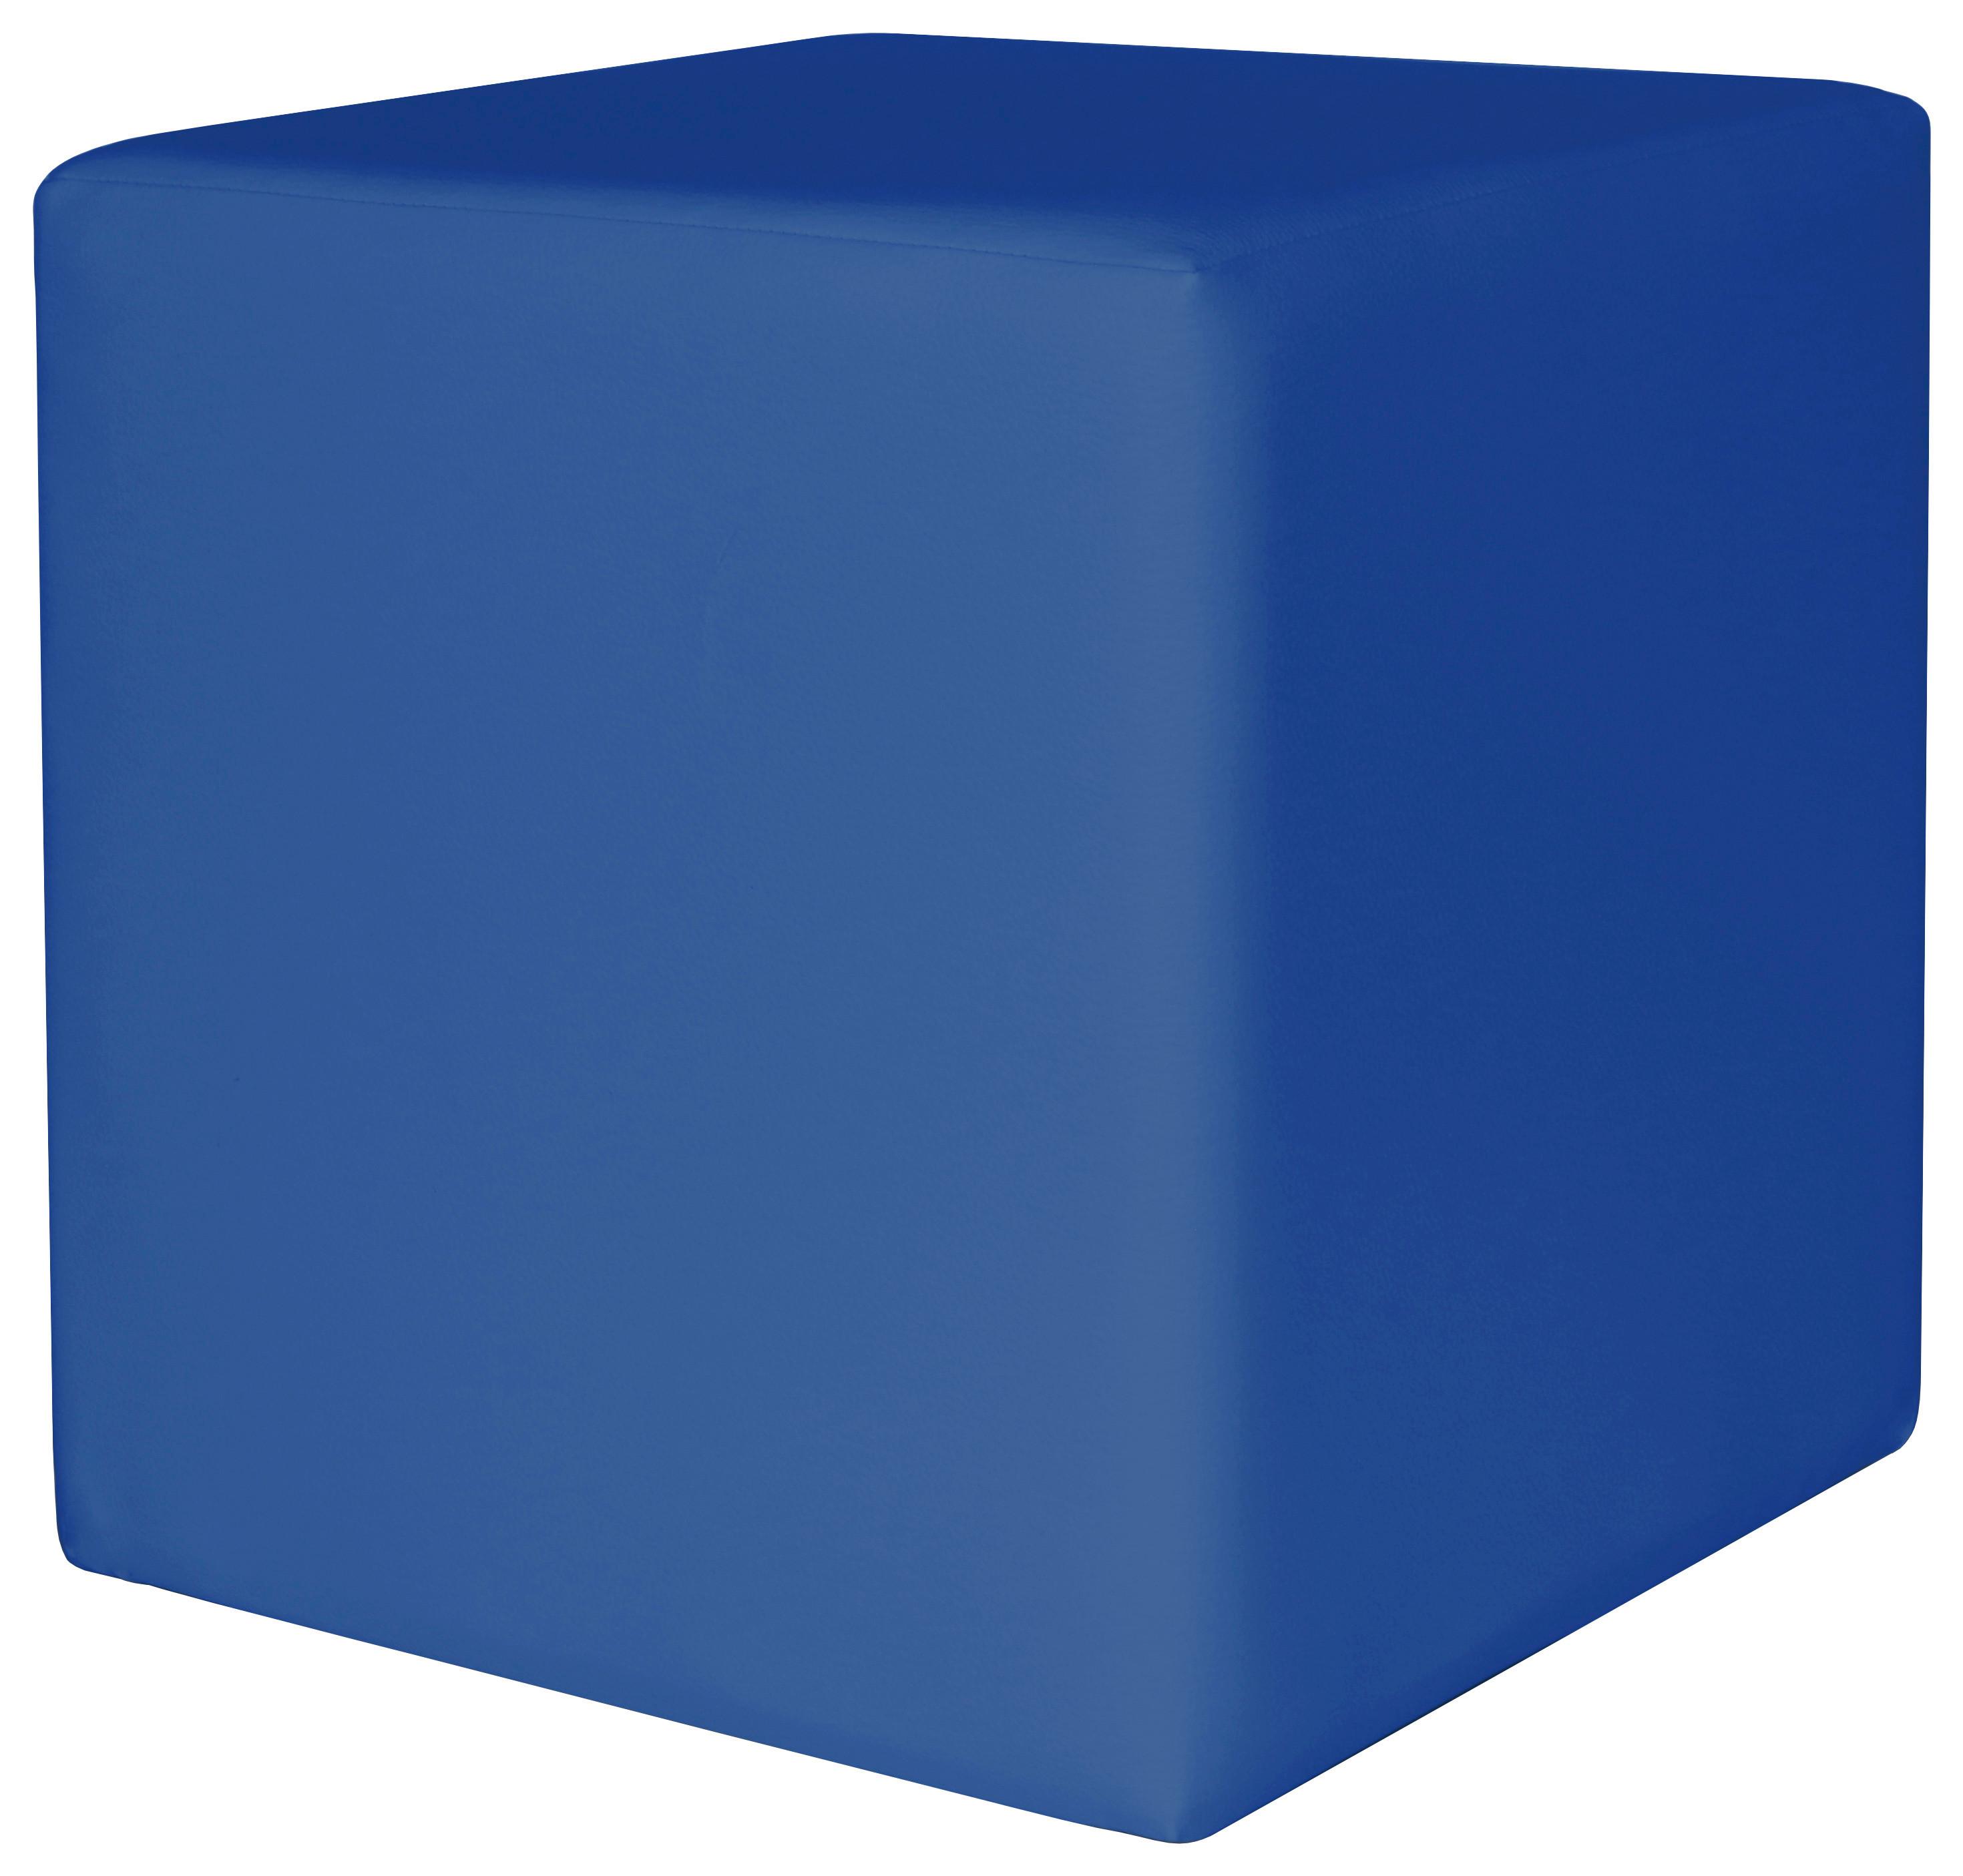 Tabure Colorfull Cube - bež/plava, Modern, tekstil/plastika (40/40/42cm) - Based